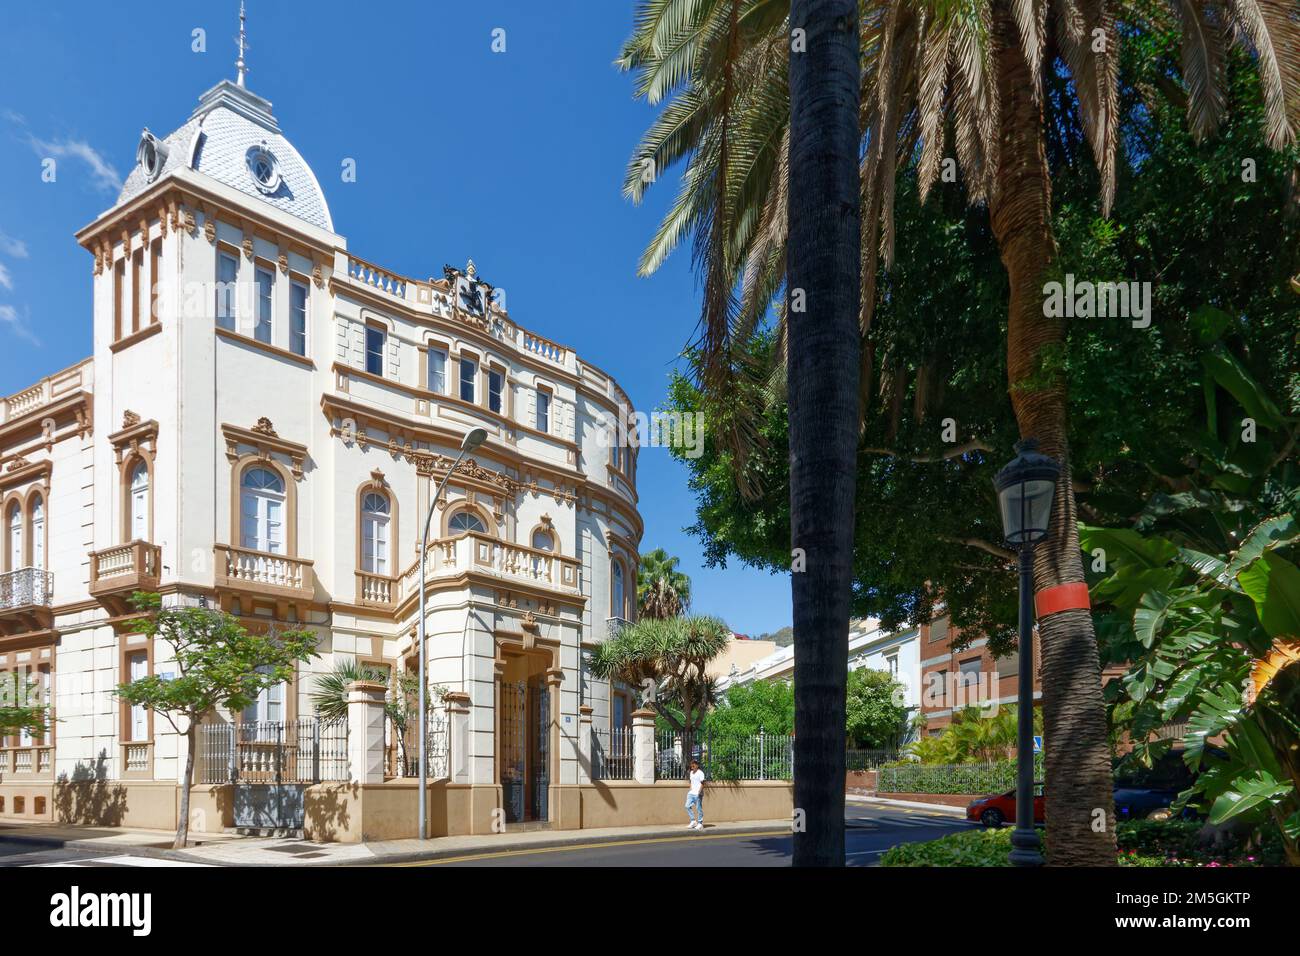 Old town in Santa Cruz de Tenerife. Stock Photo